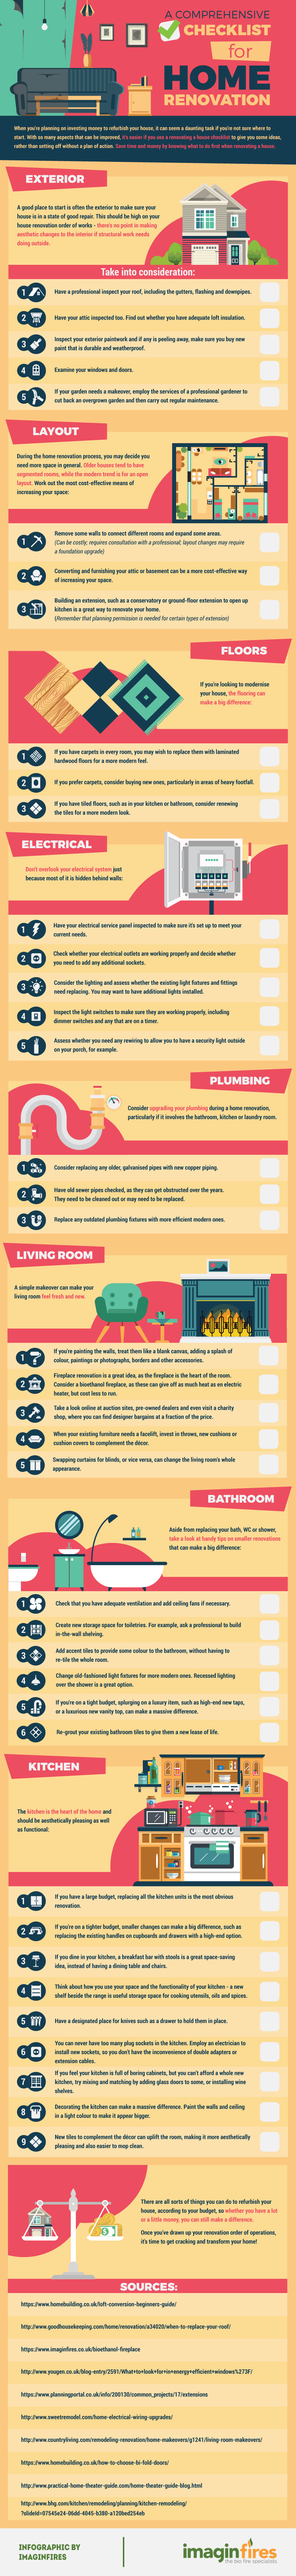 Checklist for Home Renovation